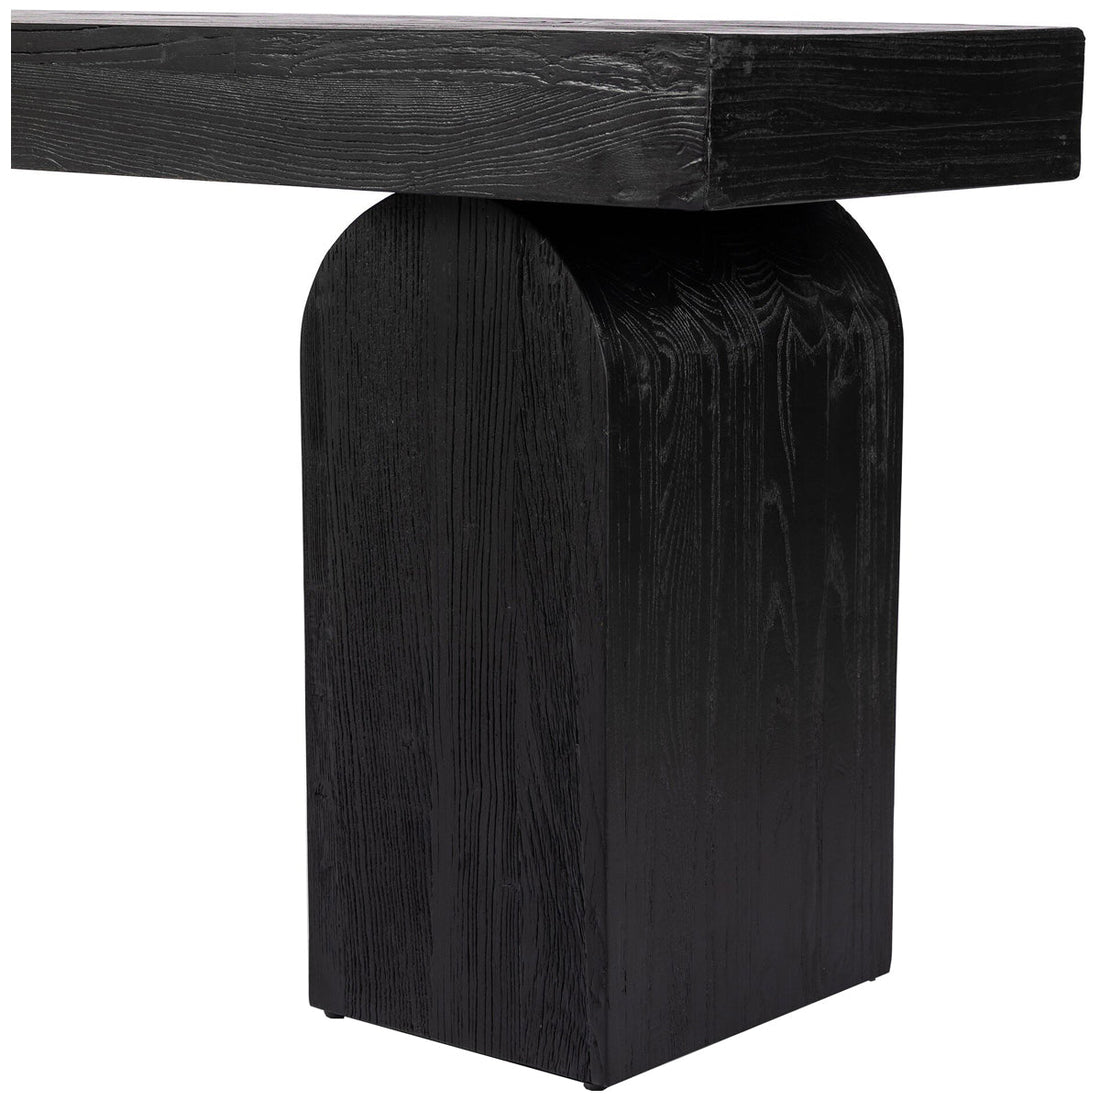 Four Hands Keane Console Table - Reclaimed Black Elm